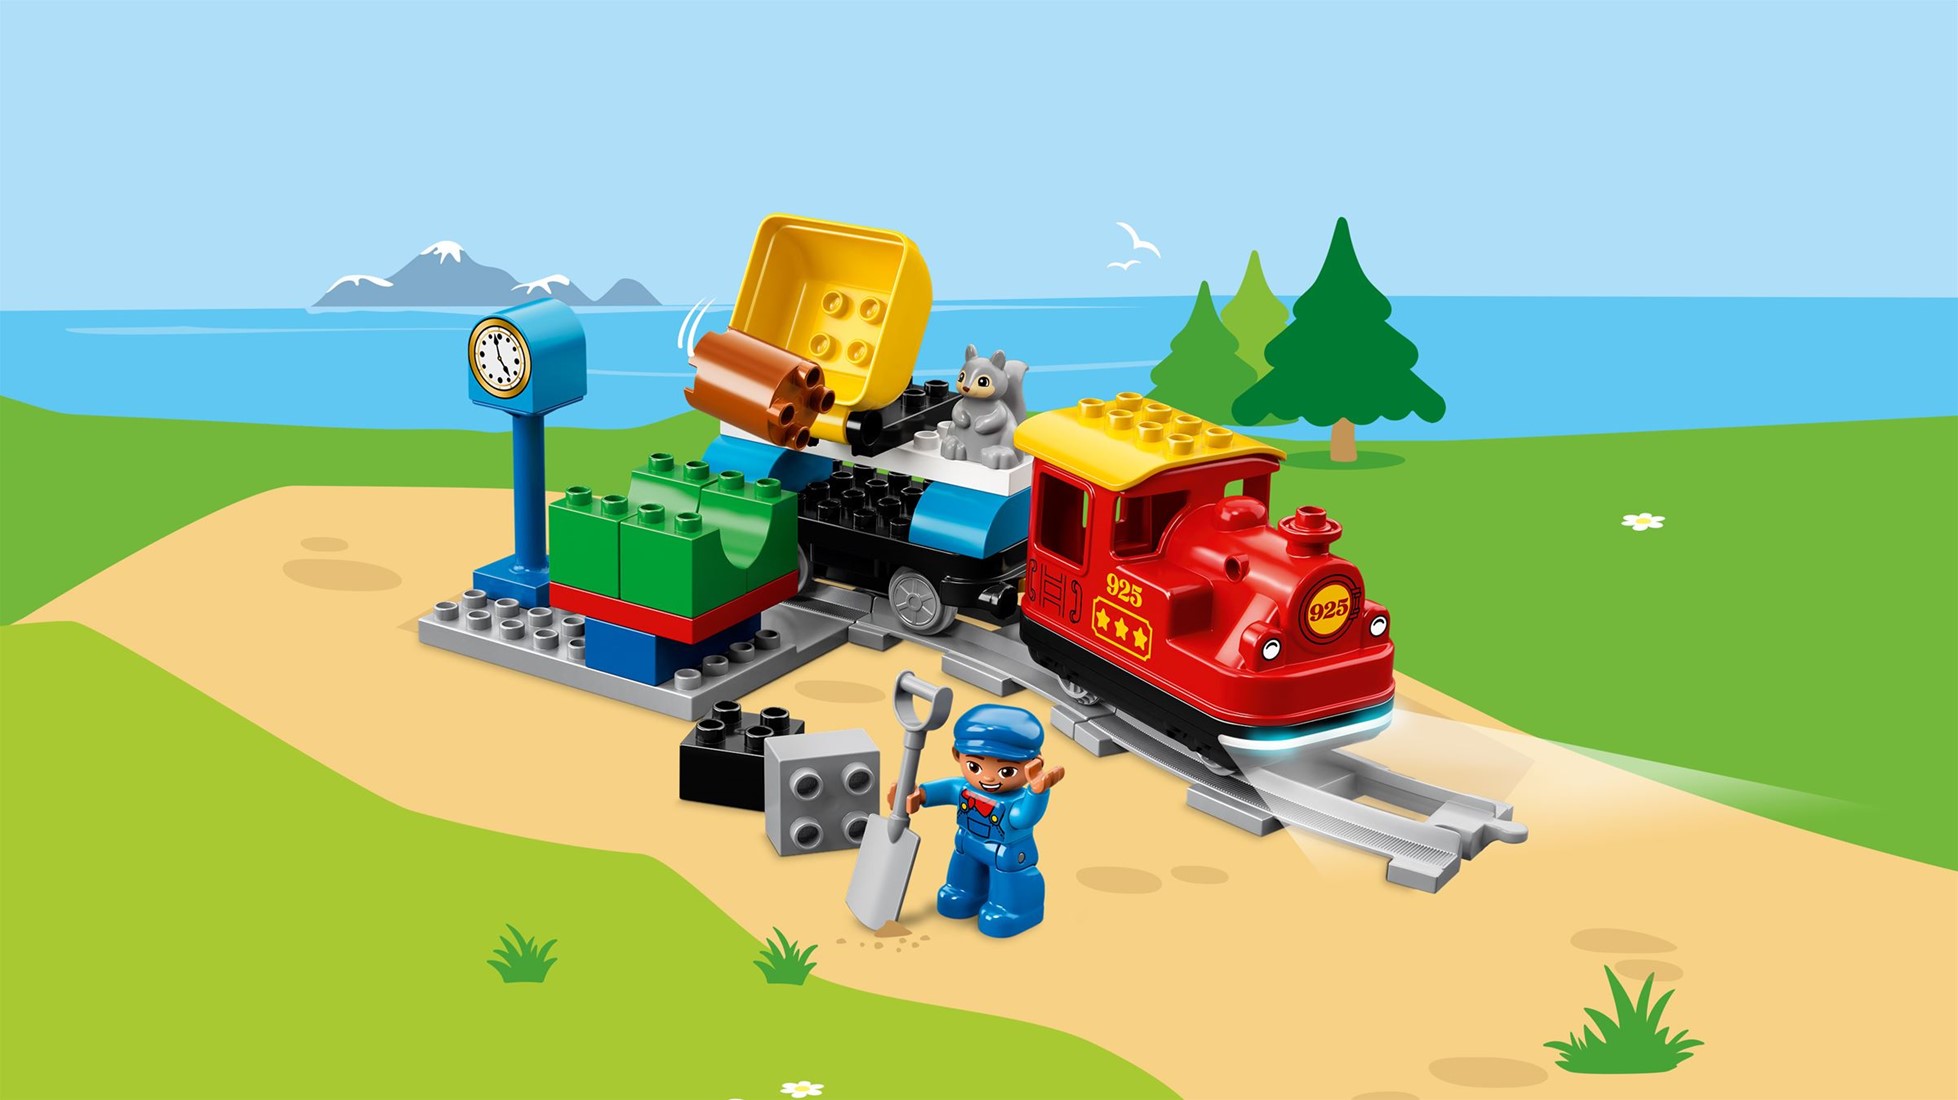 Set LEGO Duplo Tren de Vapor 10874